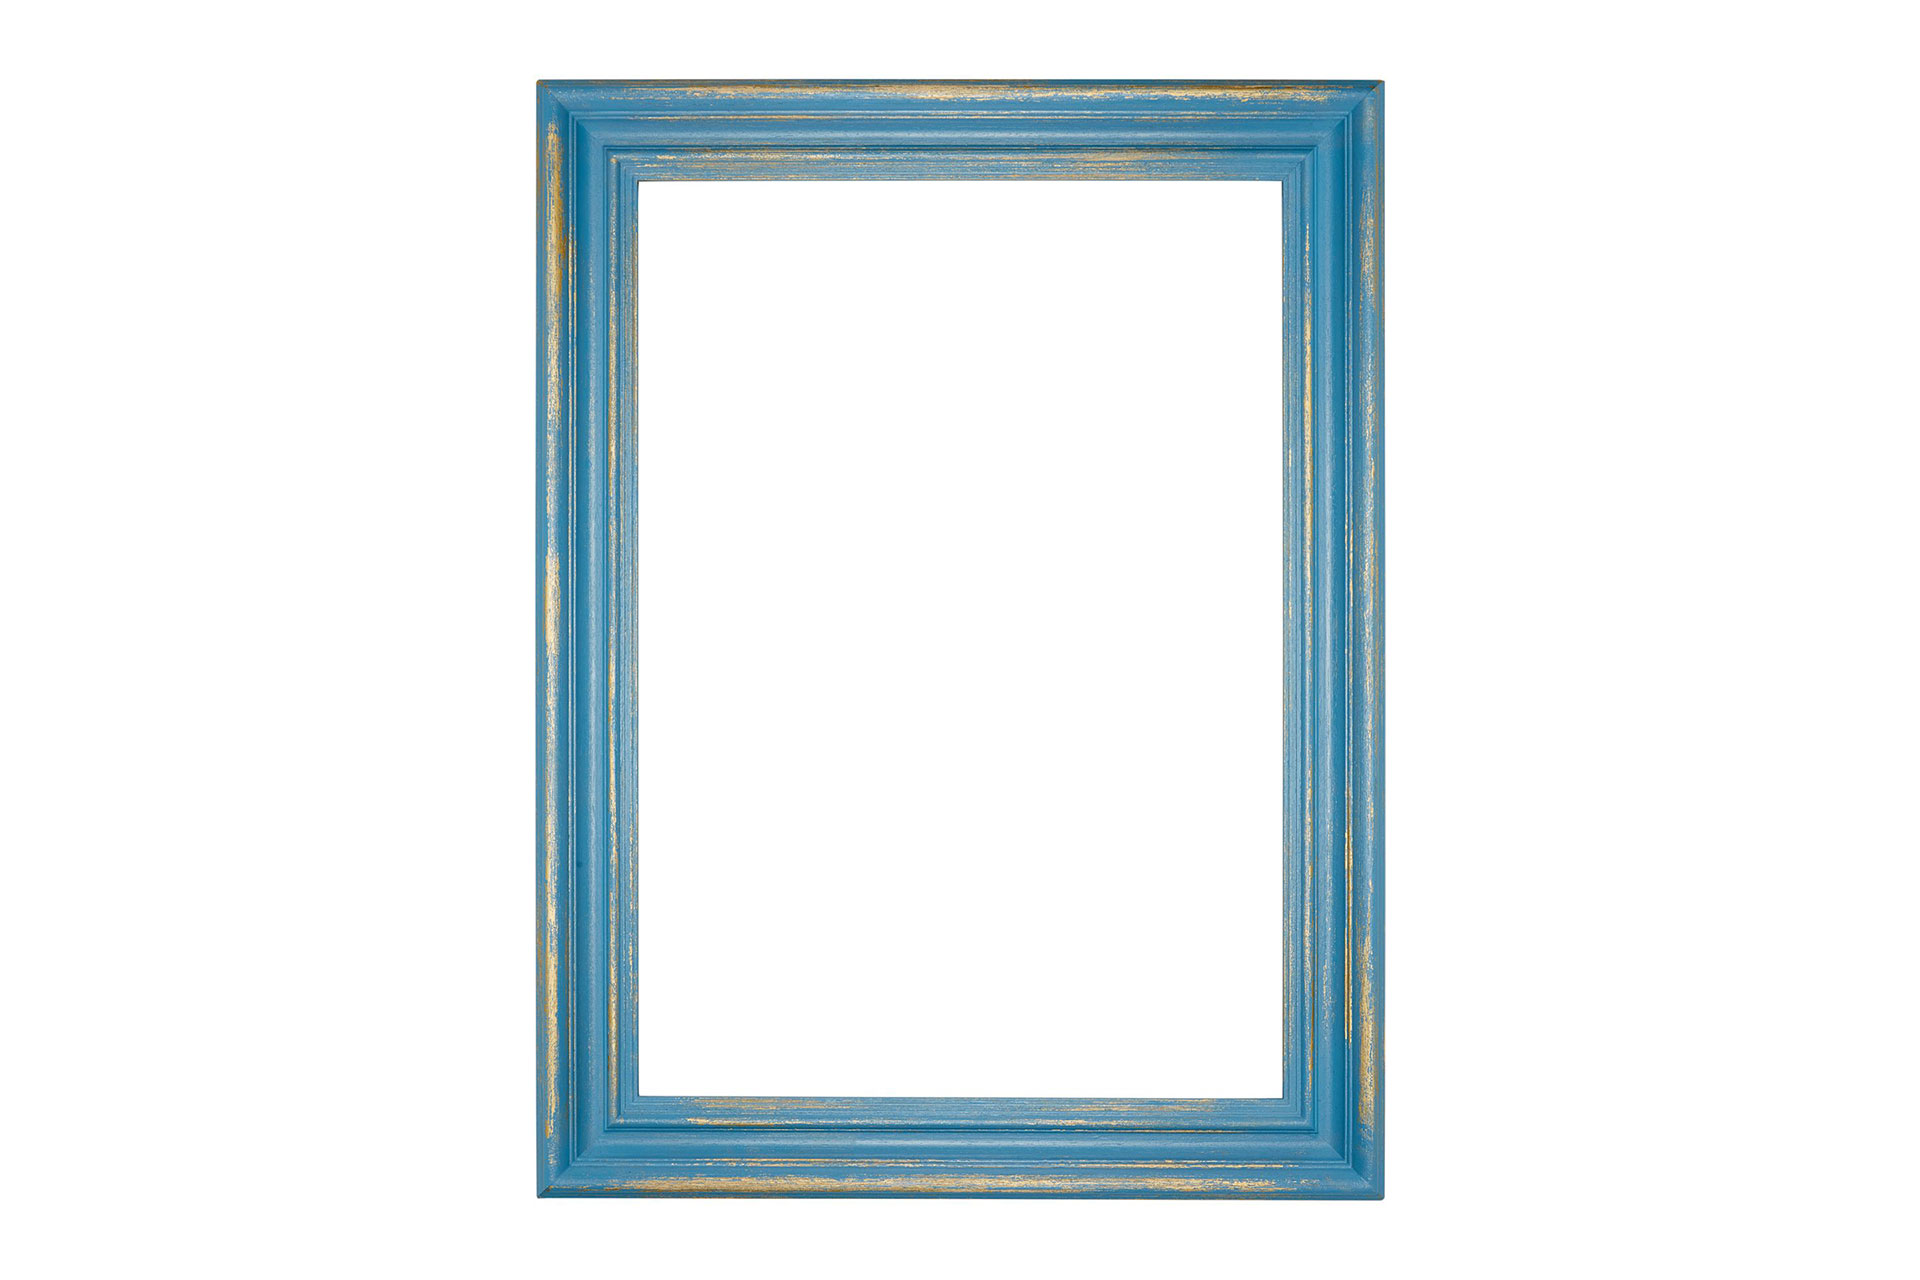 Wandspiegel Modell Le Havre, Gold/Hellblau Form: rechteckig Herstellung: by ASR-Rahmendesign Material: Holz, Wandspiegel, Shabby-Chic, Rahmen ohne Spiegel